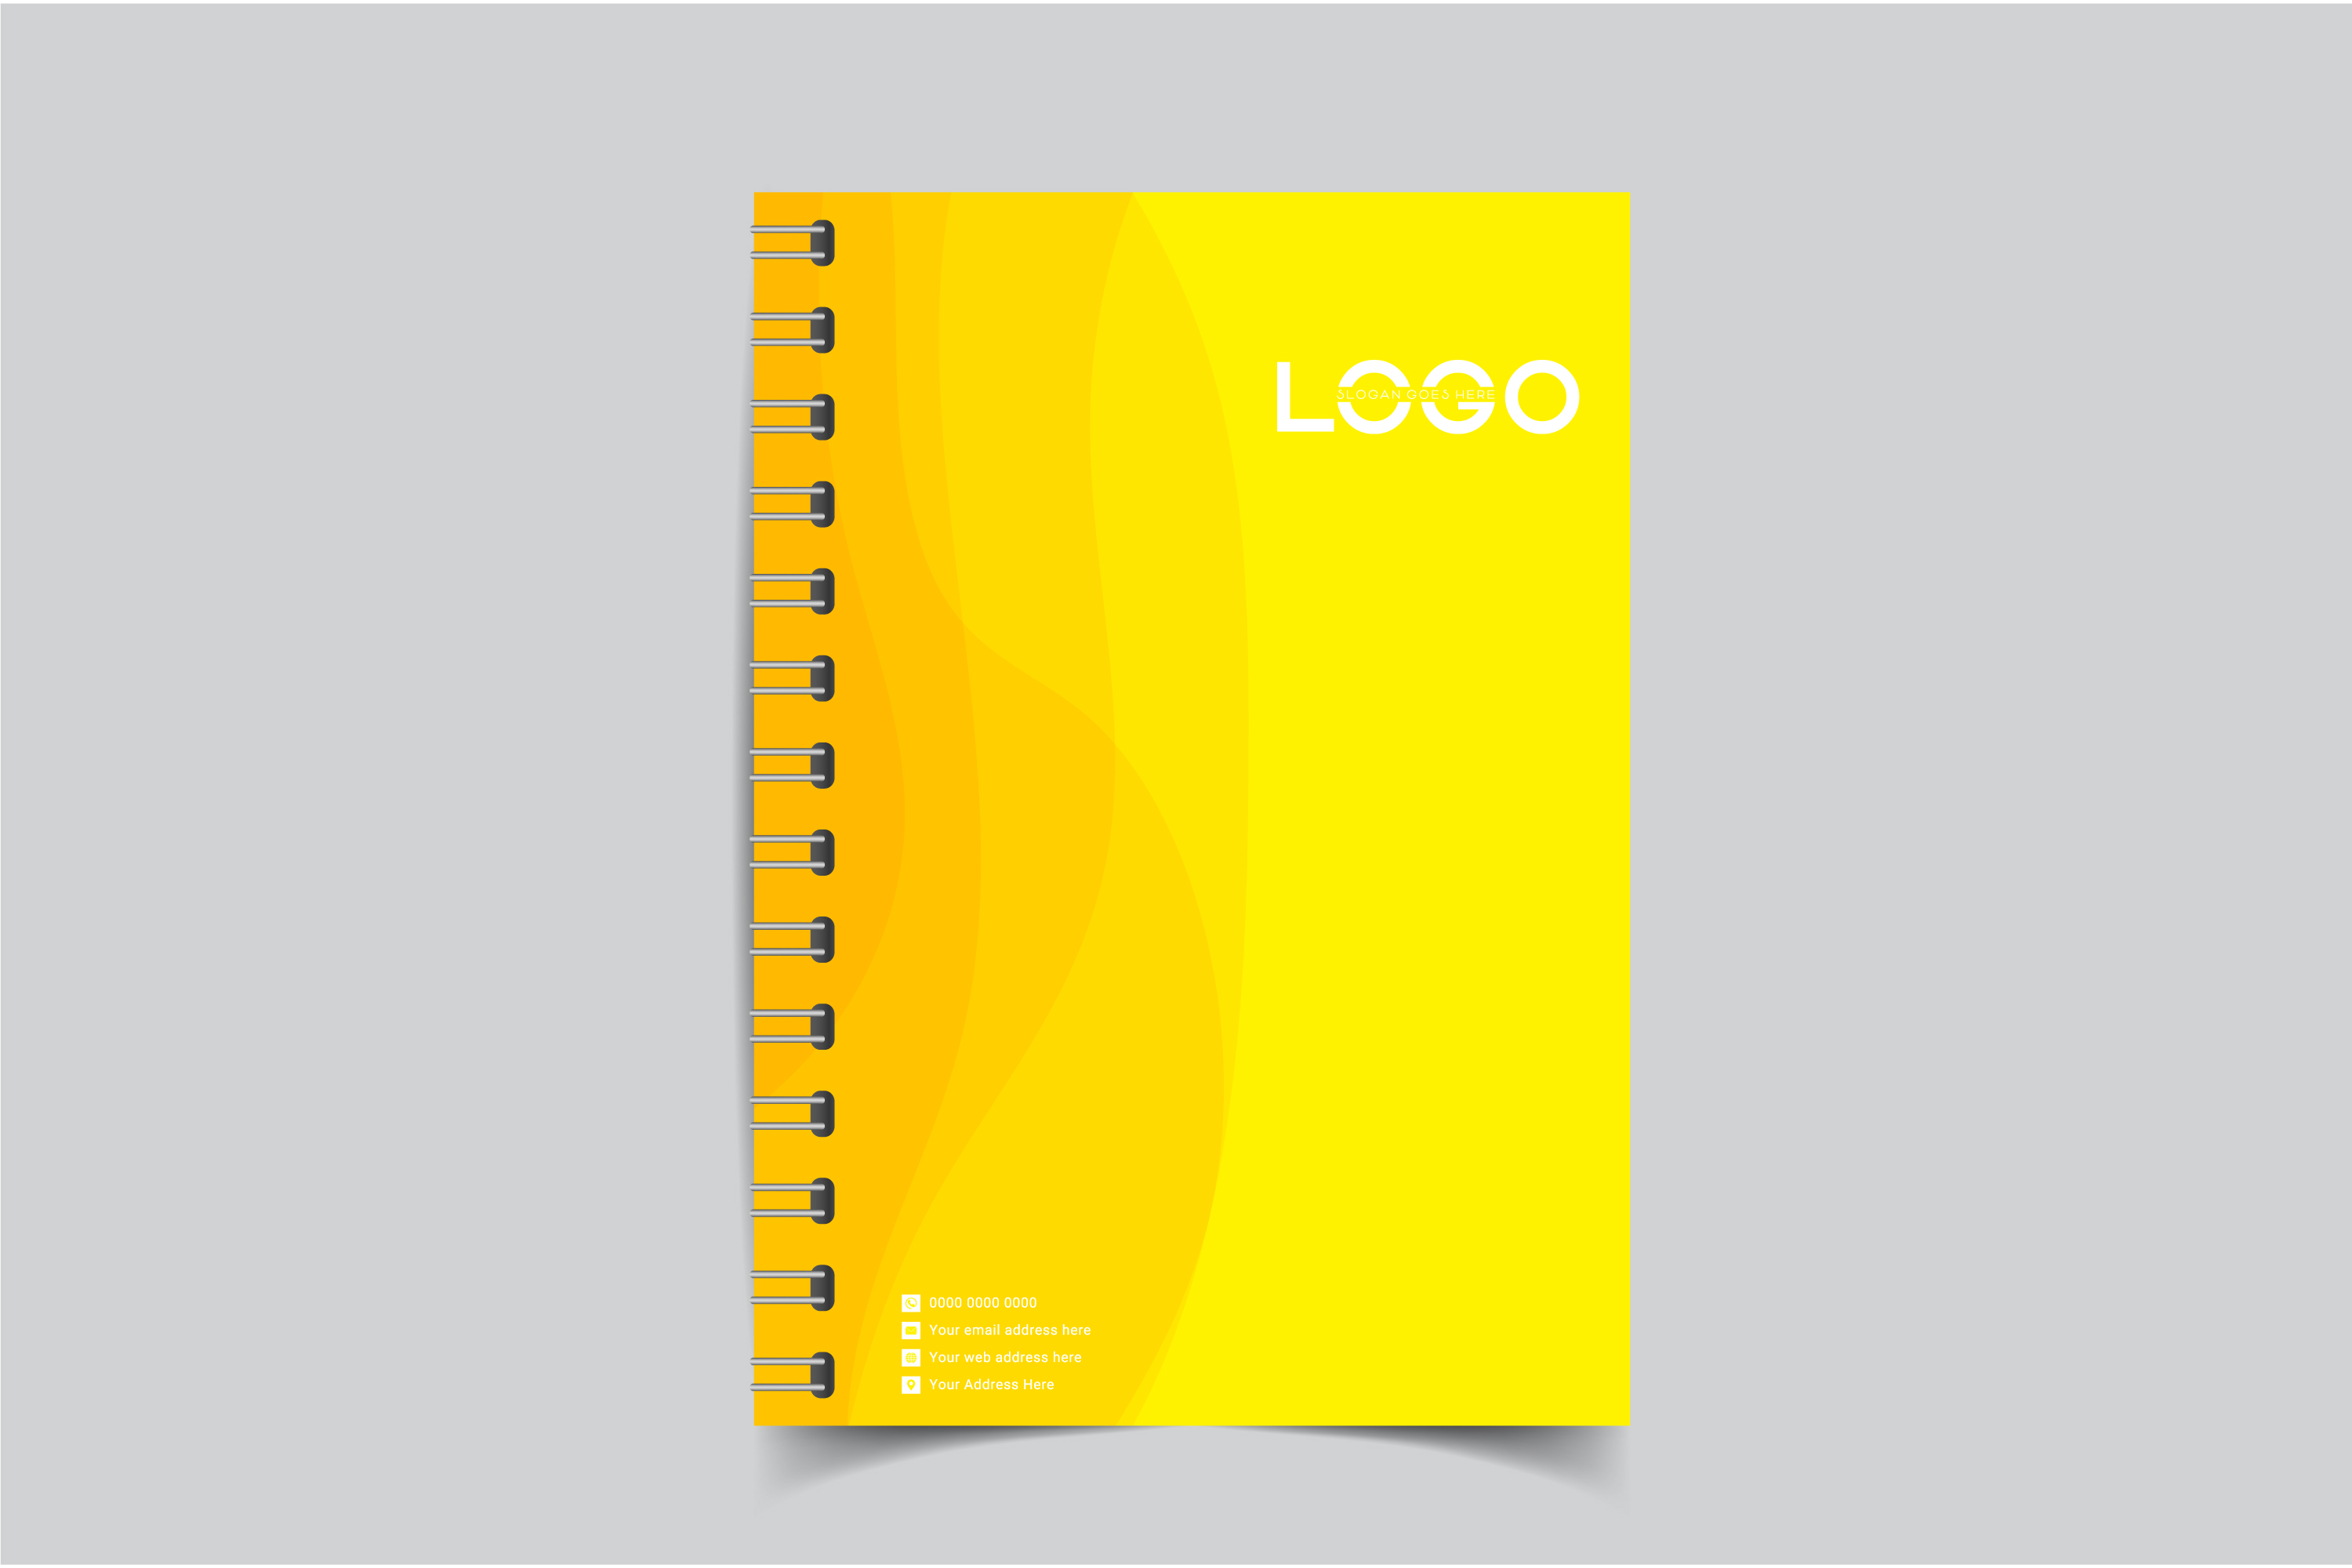 Notebook Cover Design Template Graphic by Ju Design · Creative Fabrica